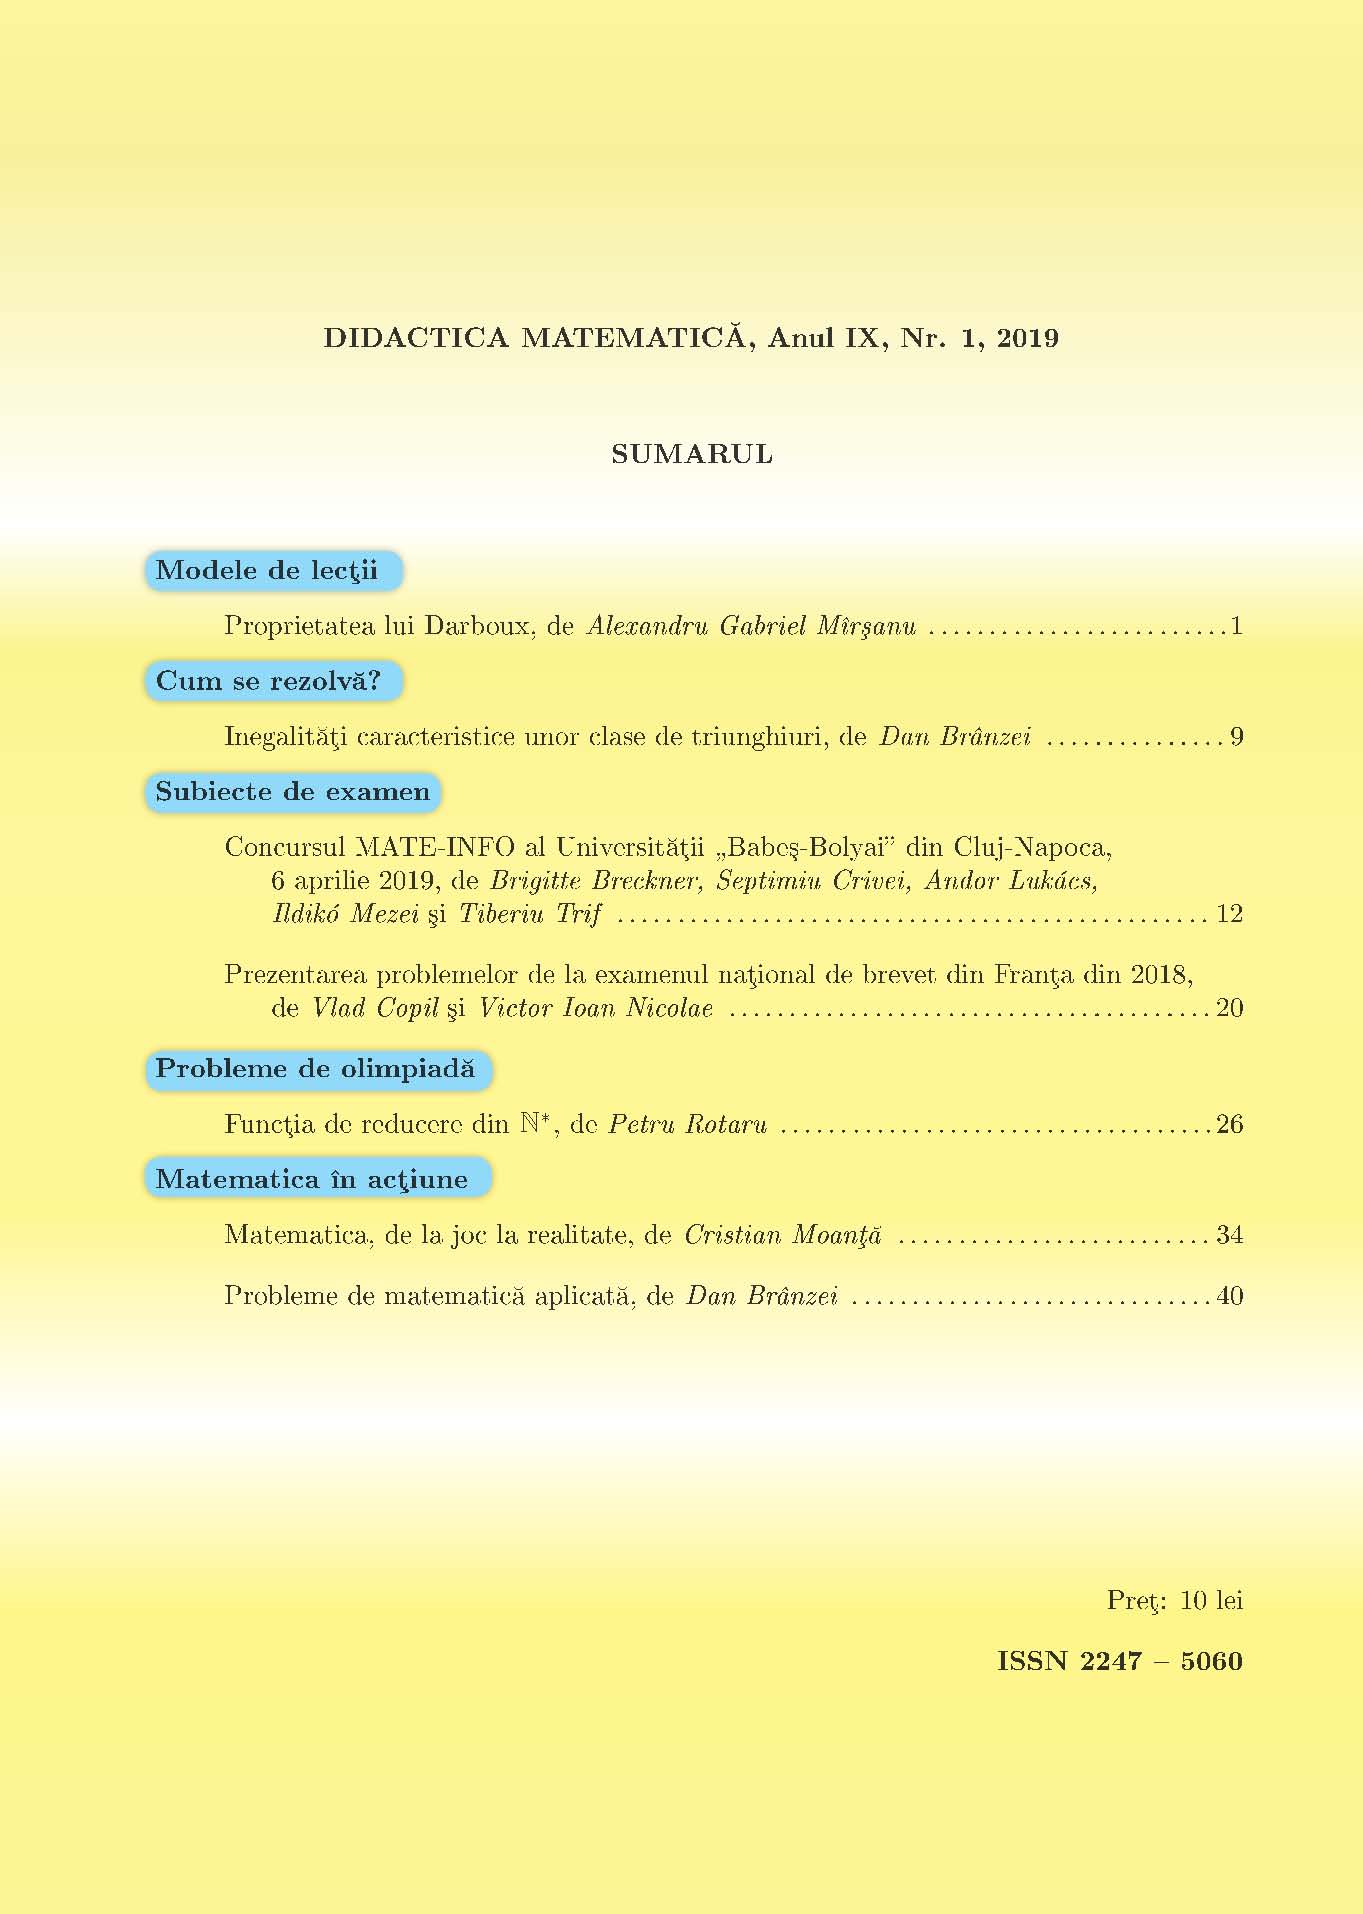 Didactica Matematica, 2019, Nr 1